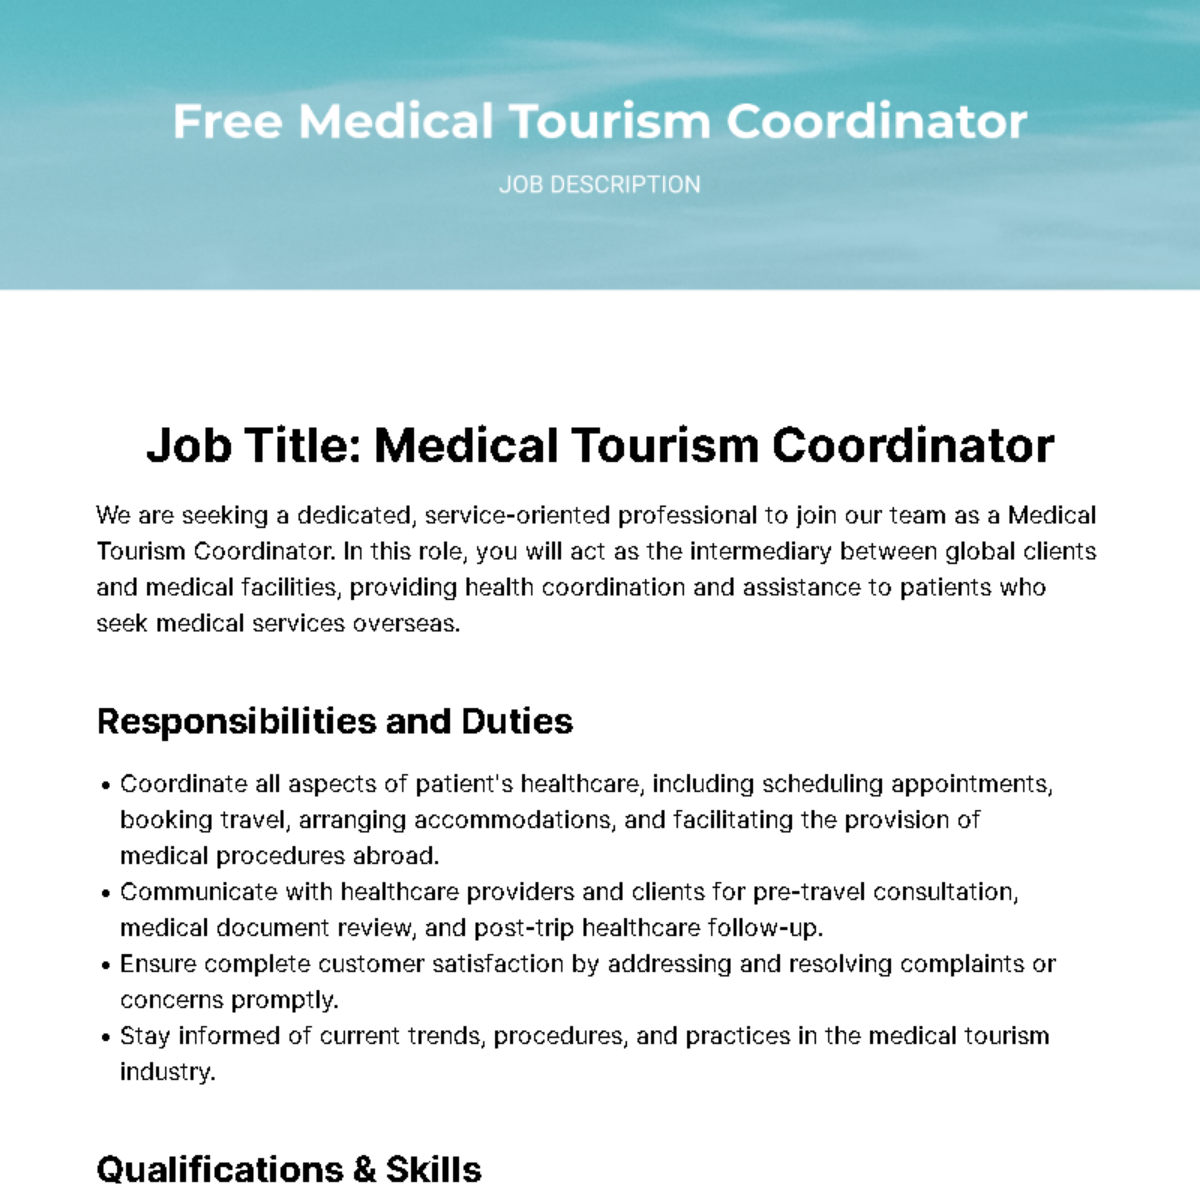 Free Medical Tourism Coordinator Job Description Template